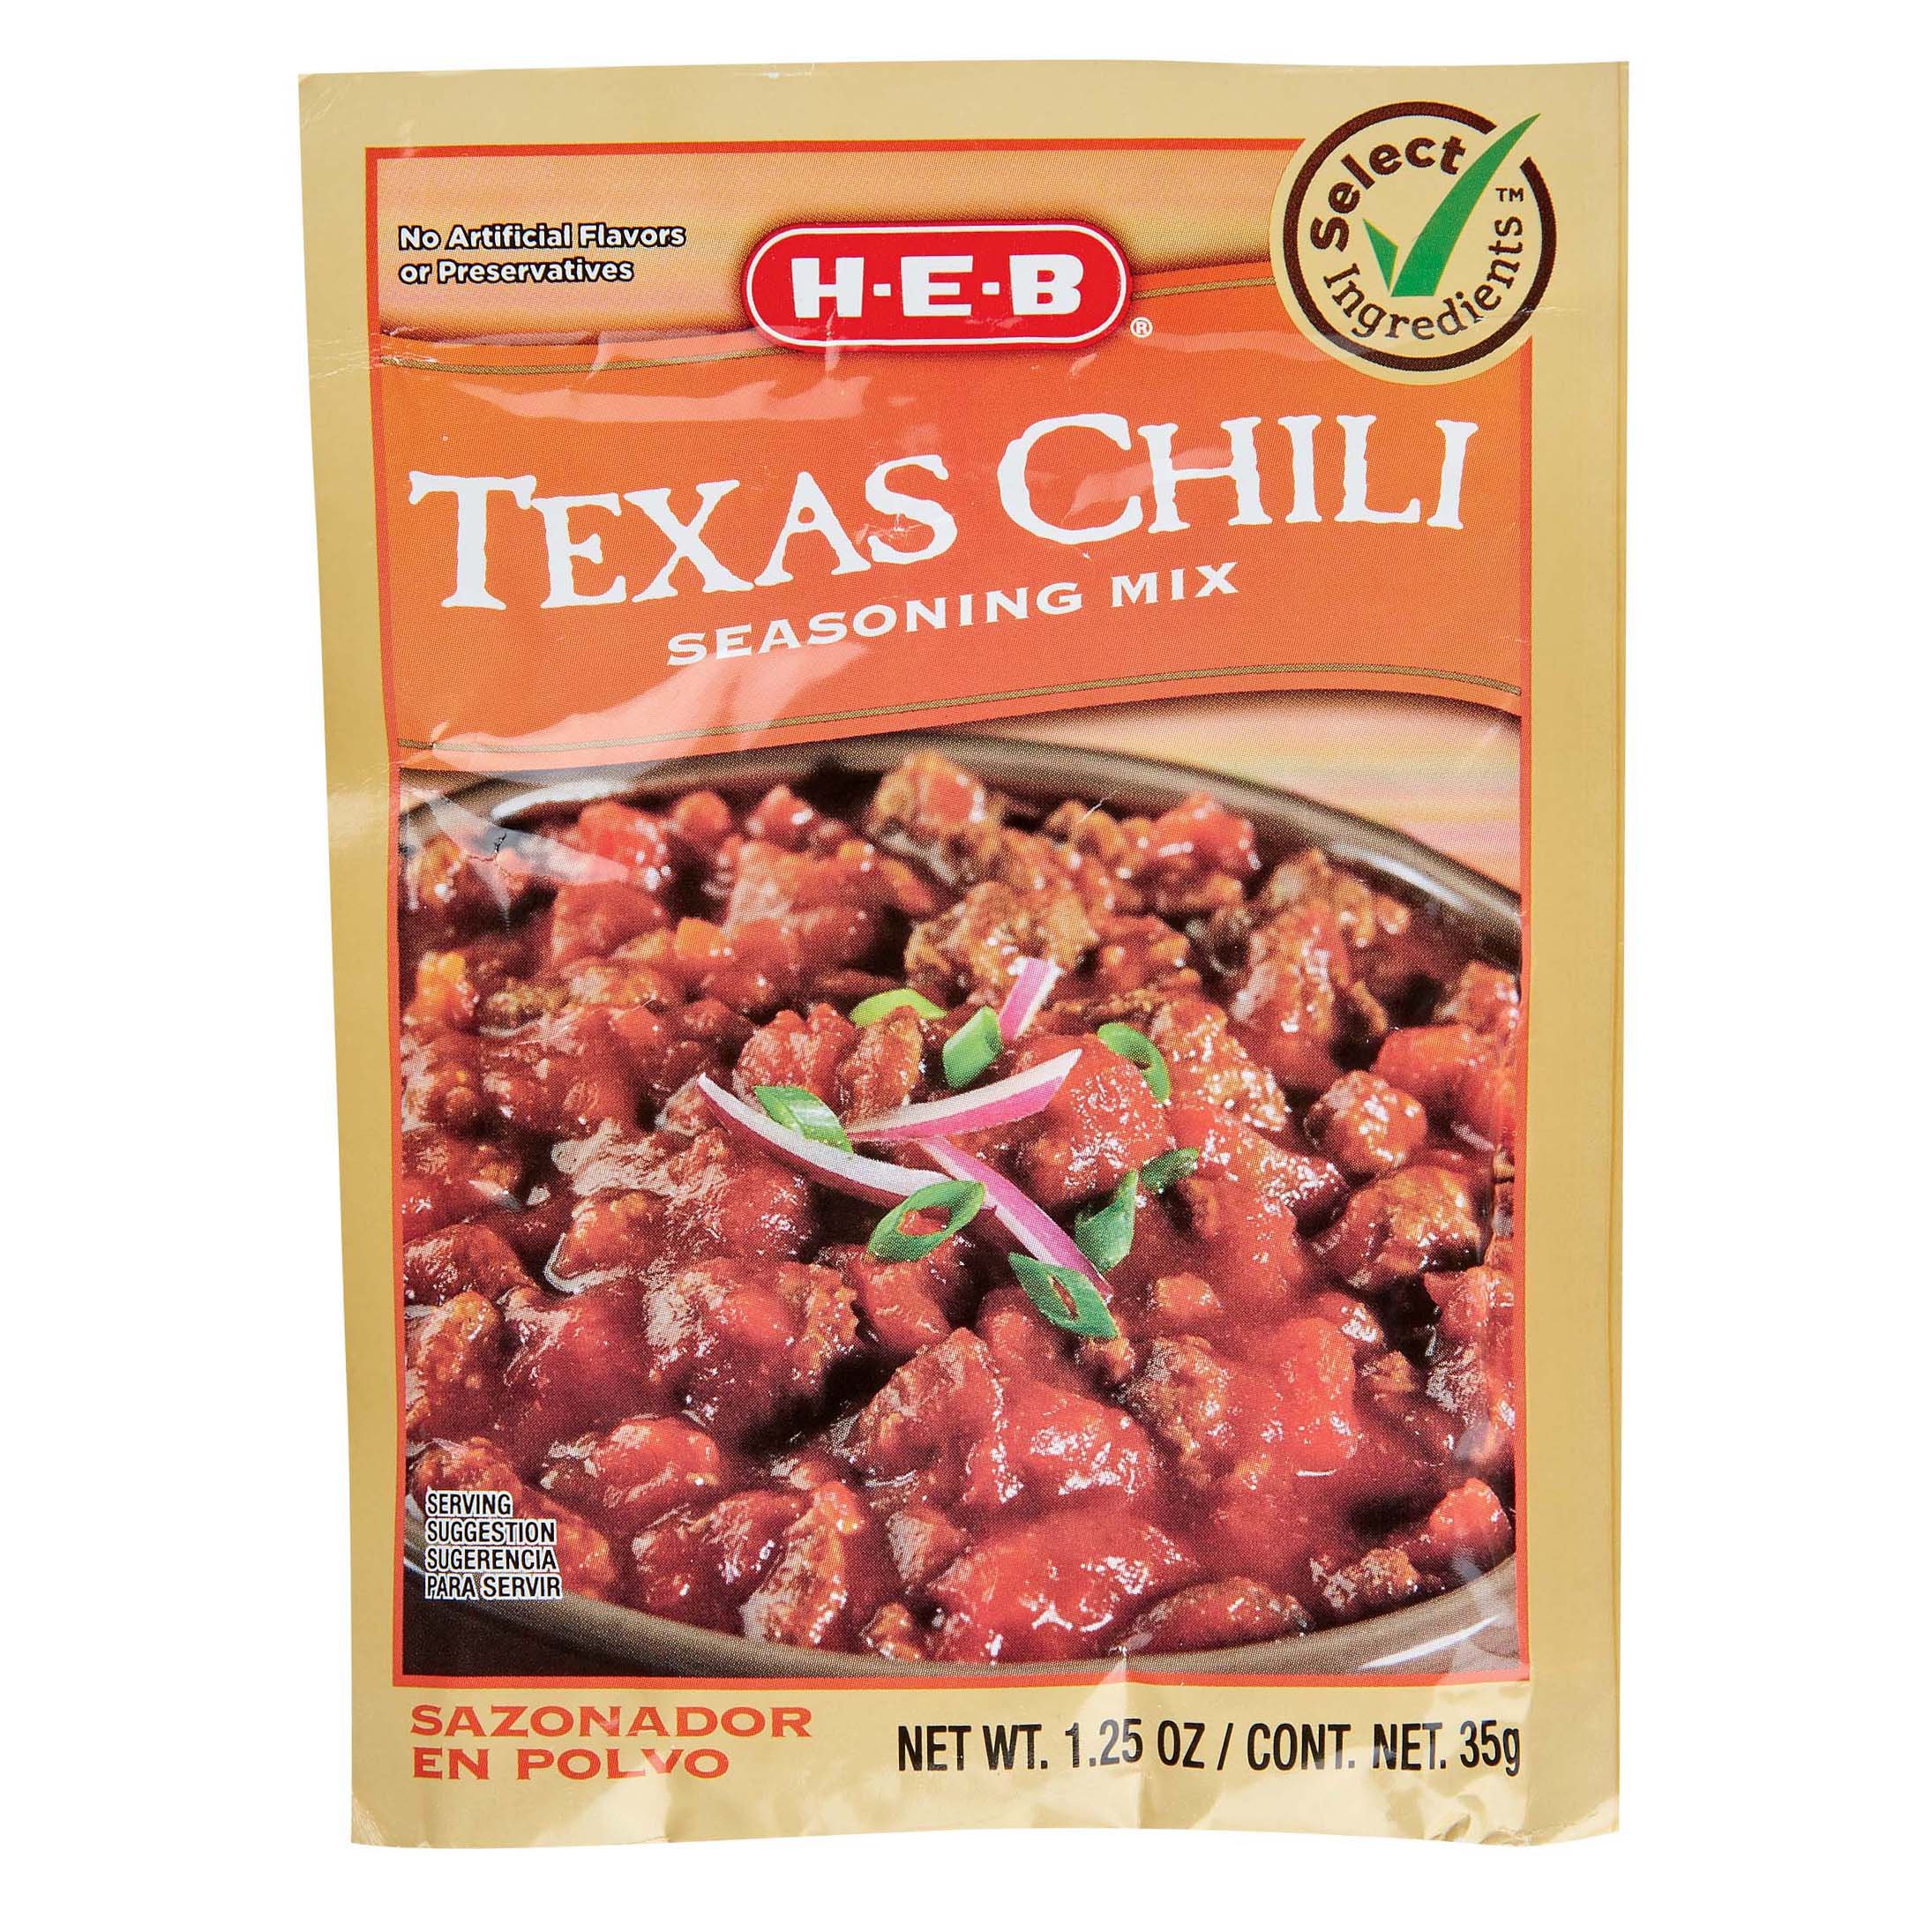 Lamme afkom vitamin H-E-B Texas Chili Seasoning Mix - Shop Spice Mixes at H-E-B